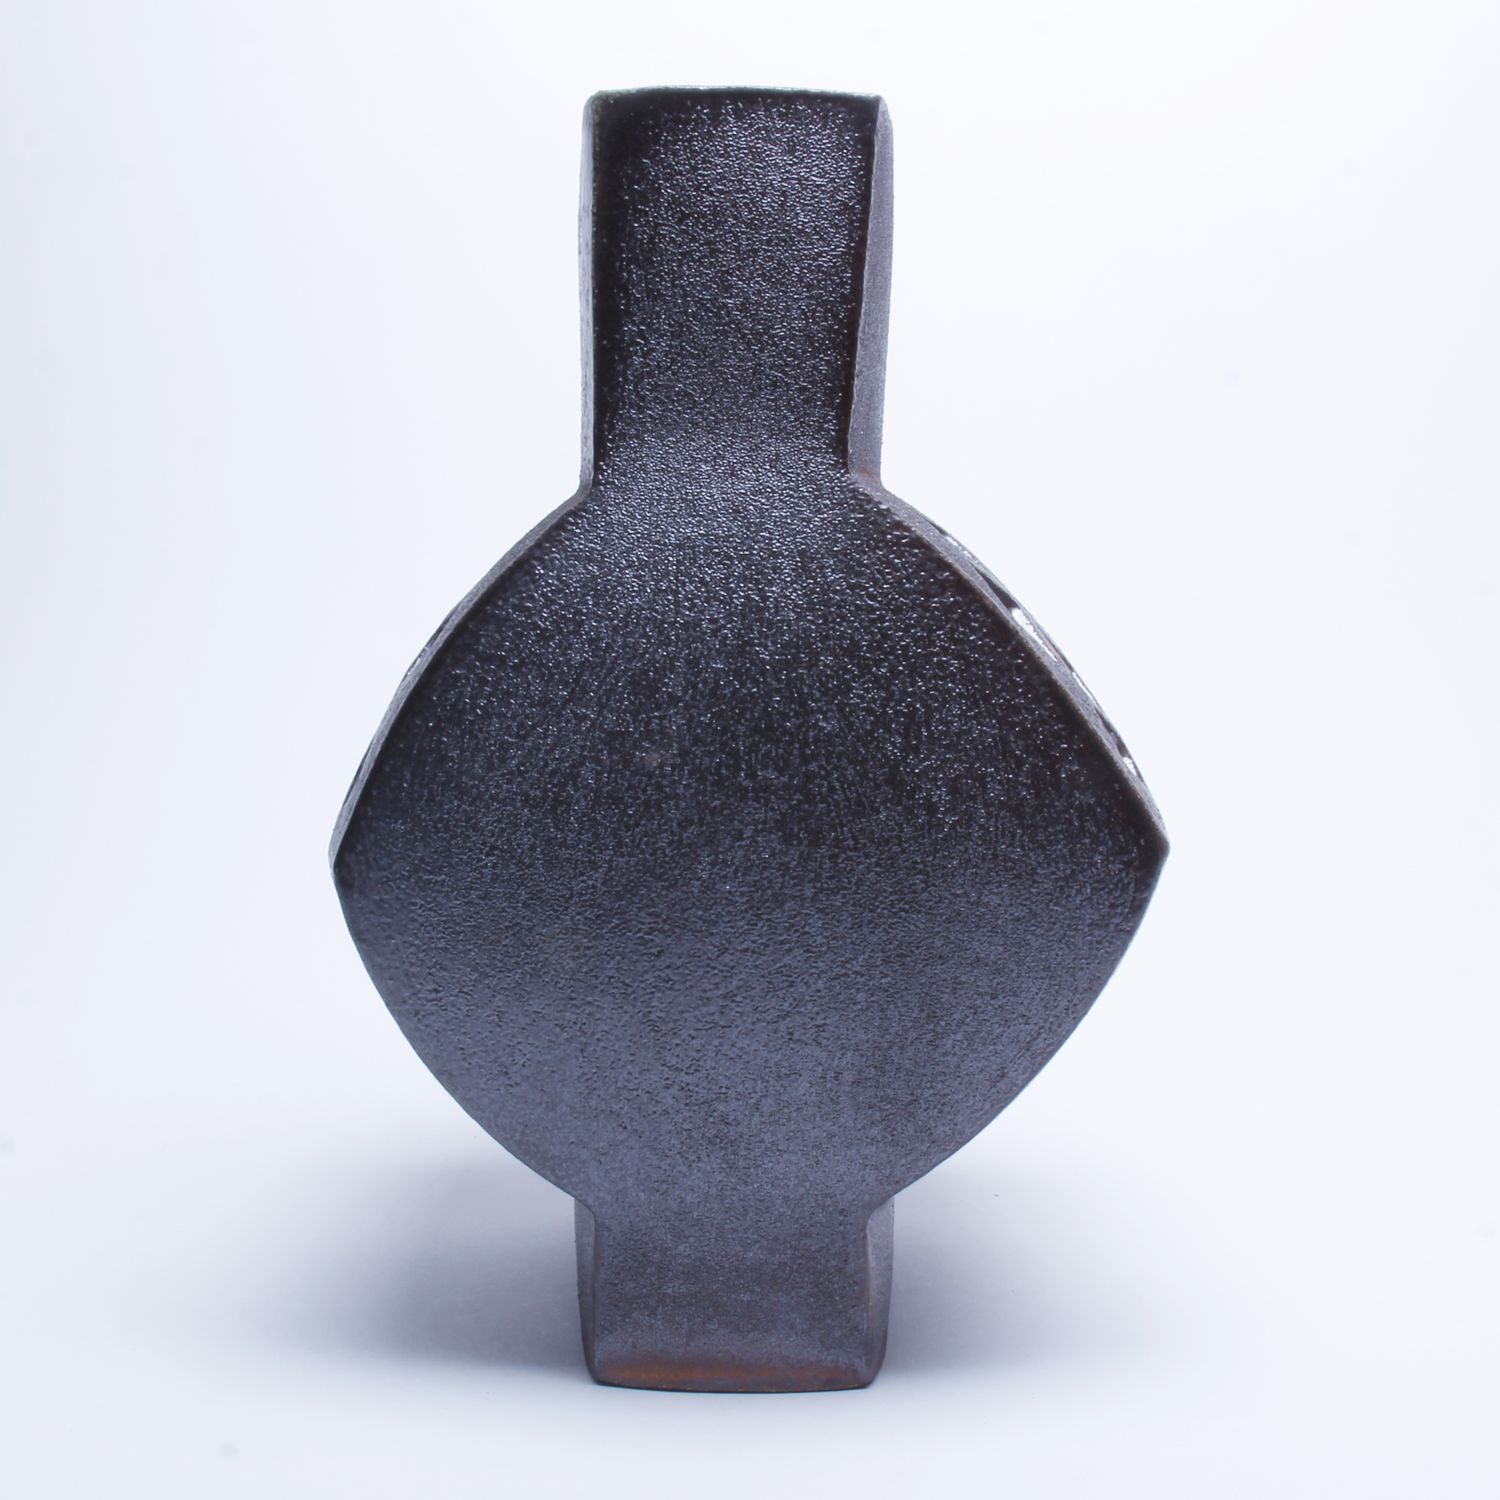 Bruce Cochrane: Flower Brik Vase Product Image 3 of 4